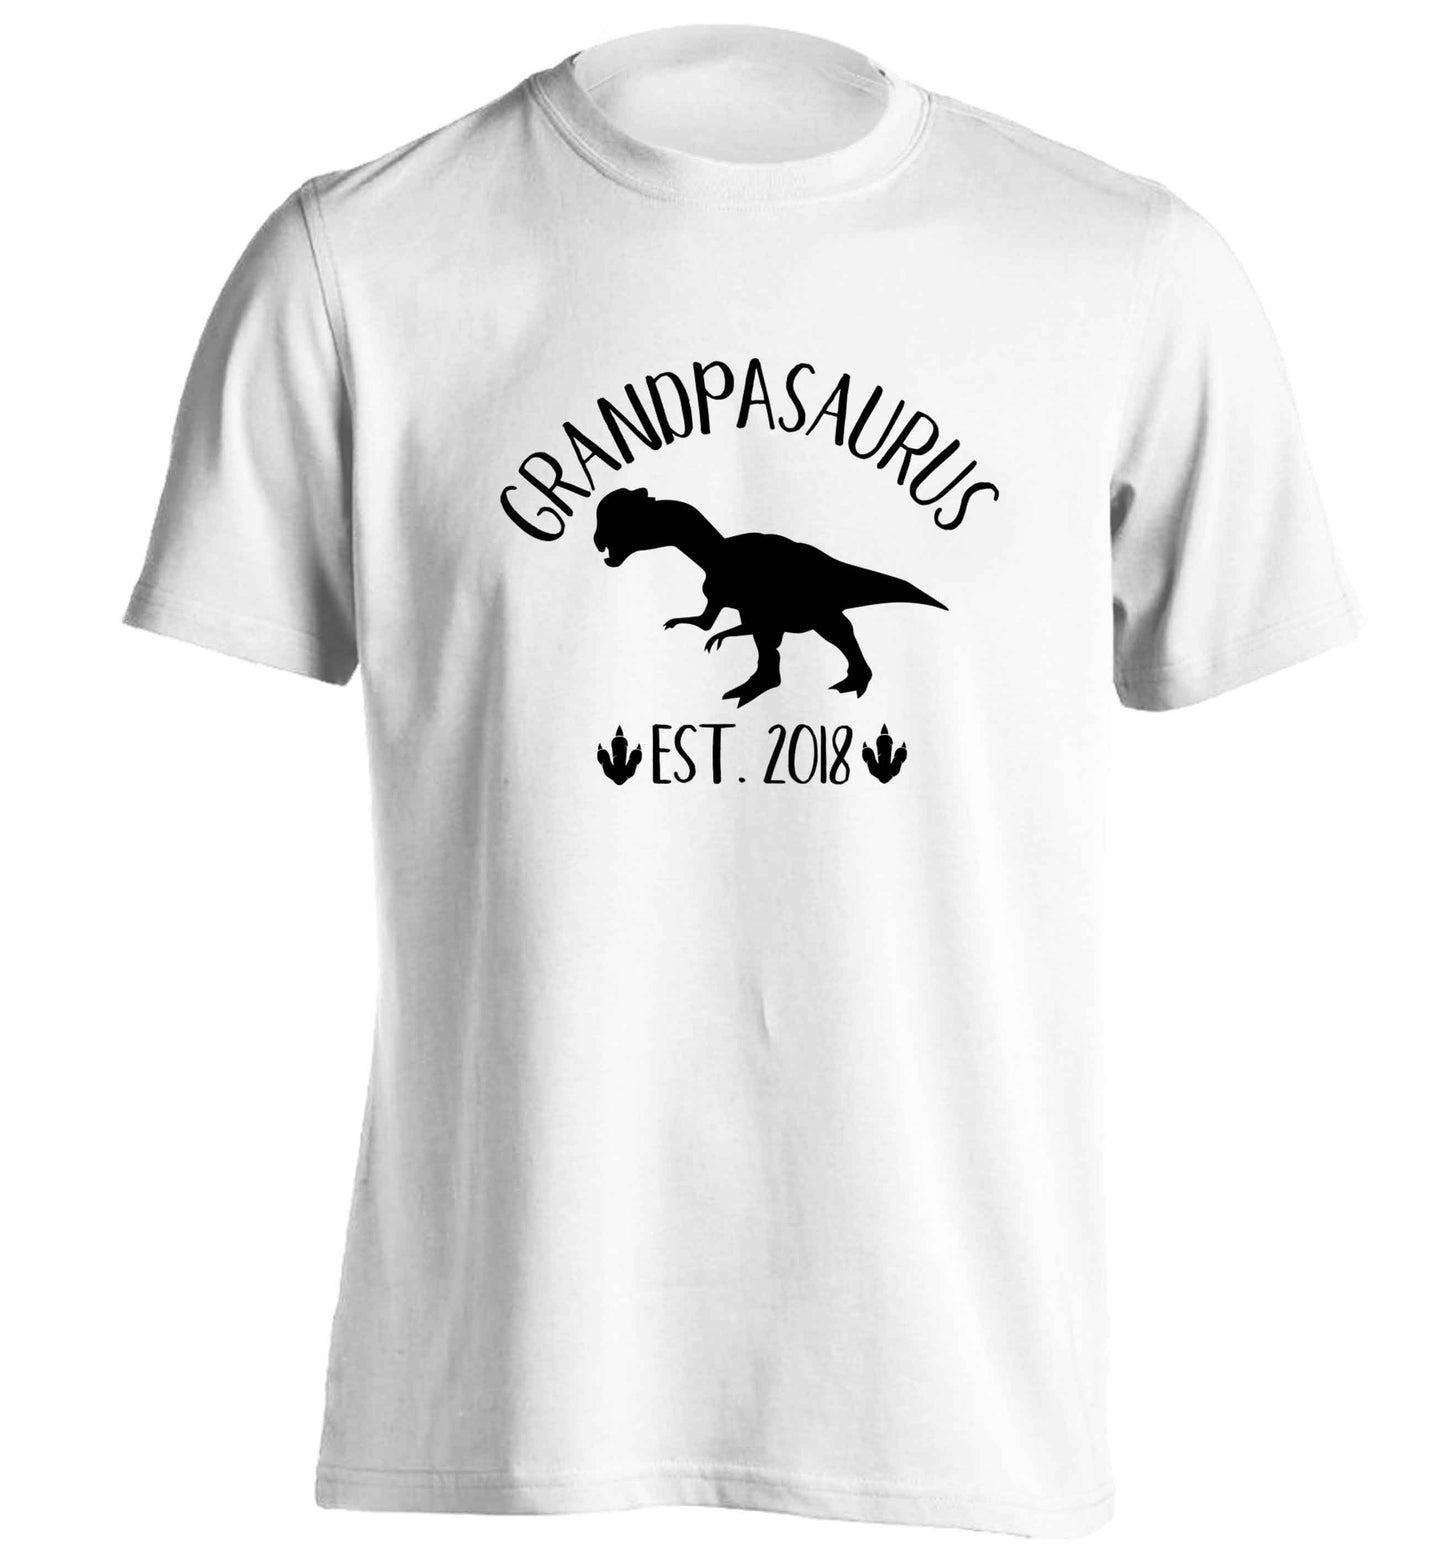 Personalised grandpasaurus since (custom date) adults unisex white Tshirt 2XL